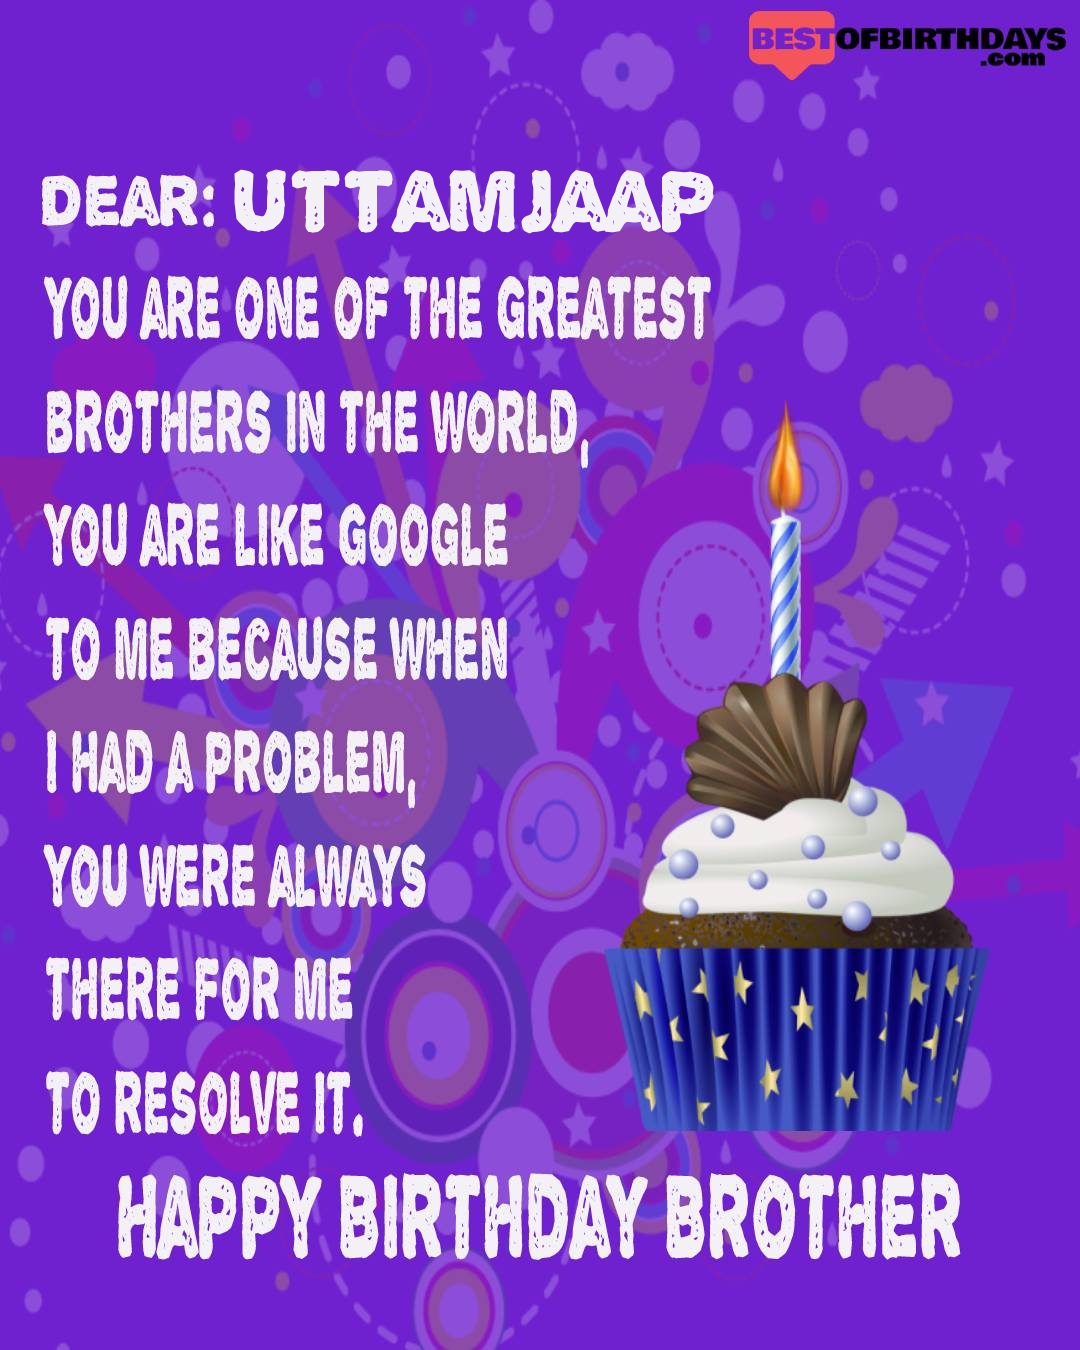 Happy birthday uttamjaap bhai brother bro